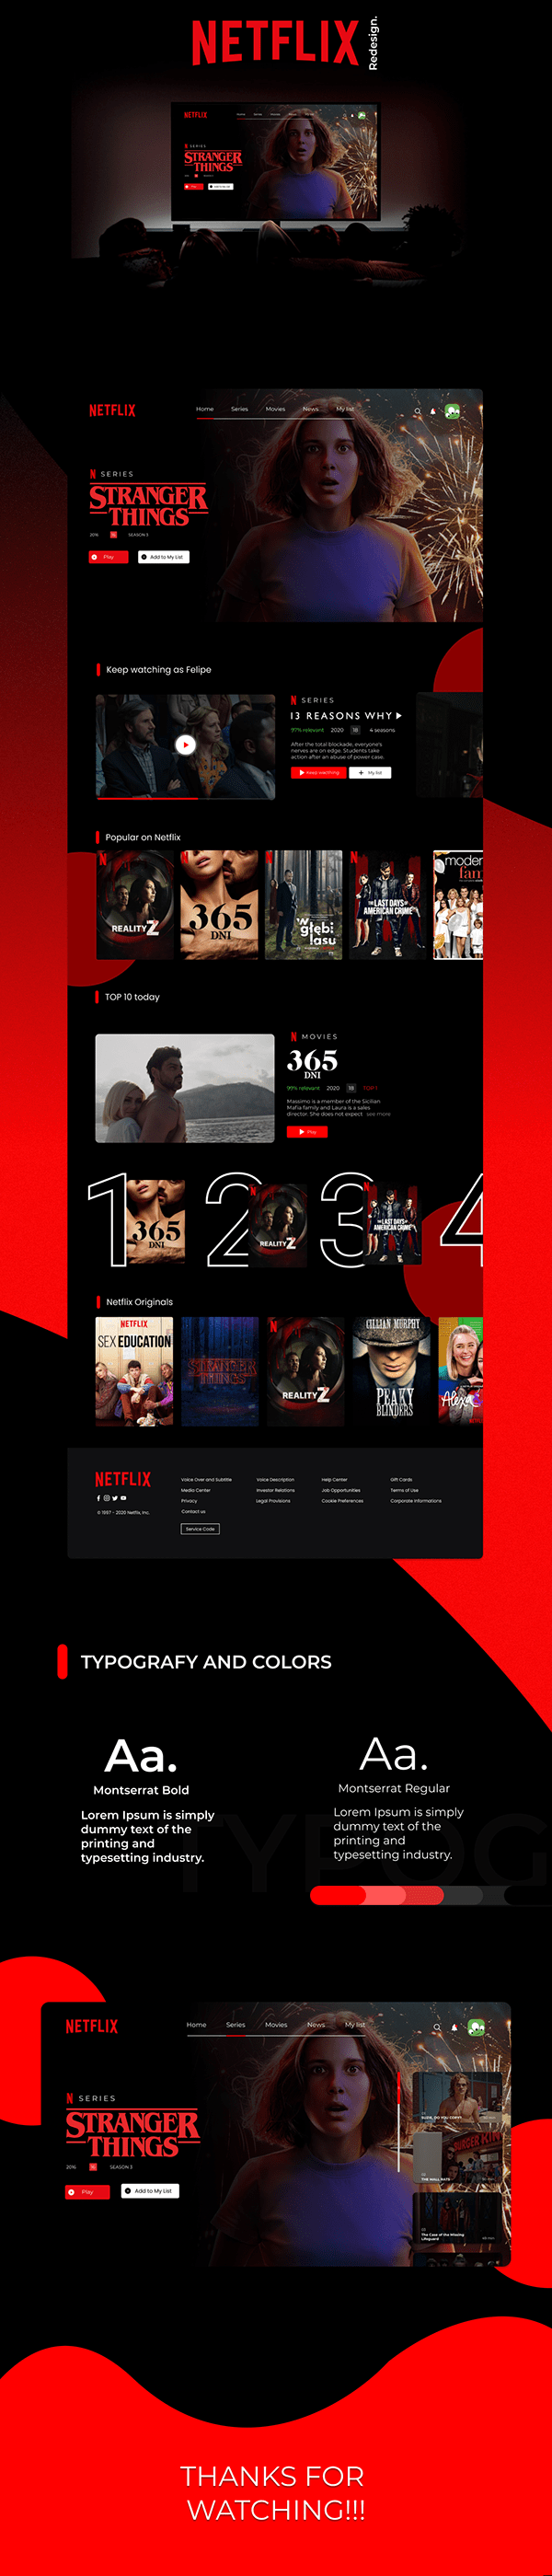 Netflix Redesign